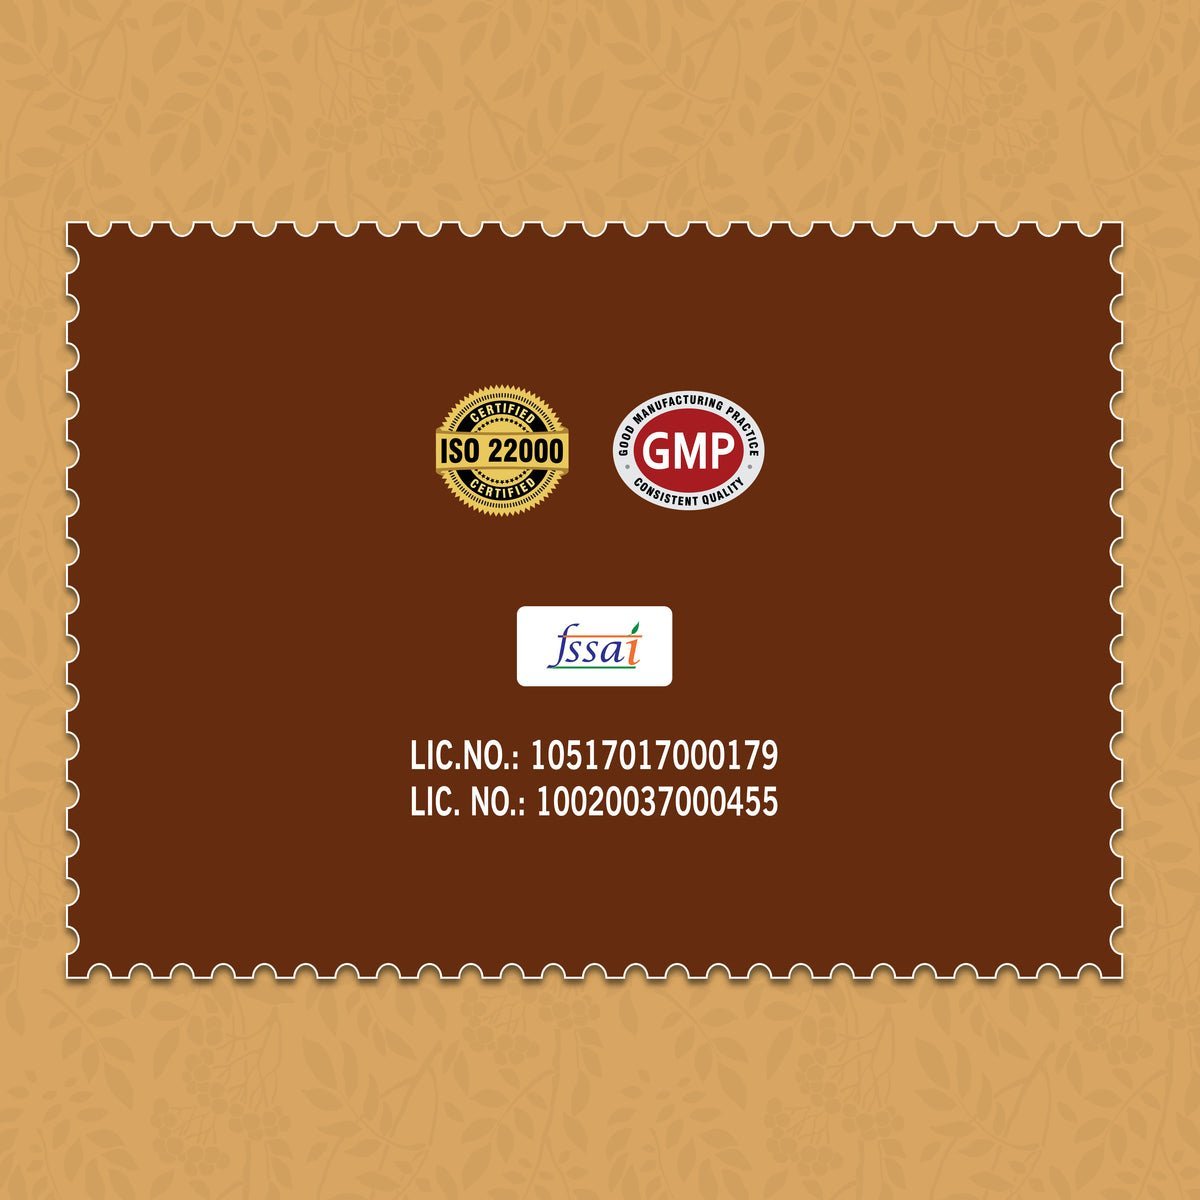 Dharwad Peda - Lynk Foods